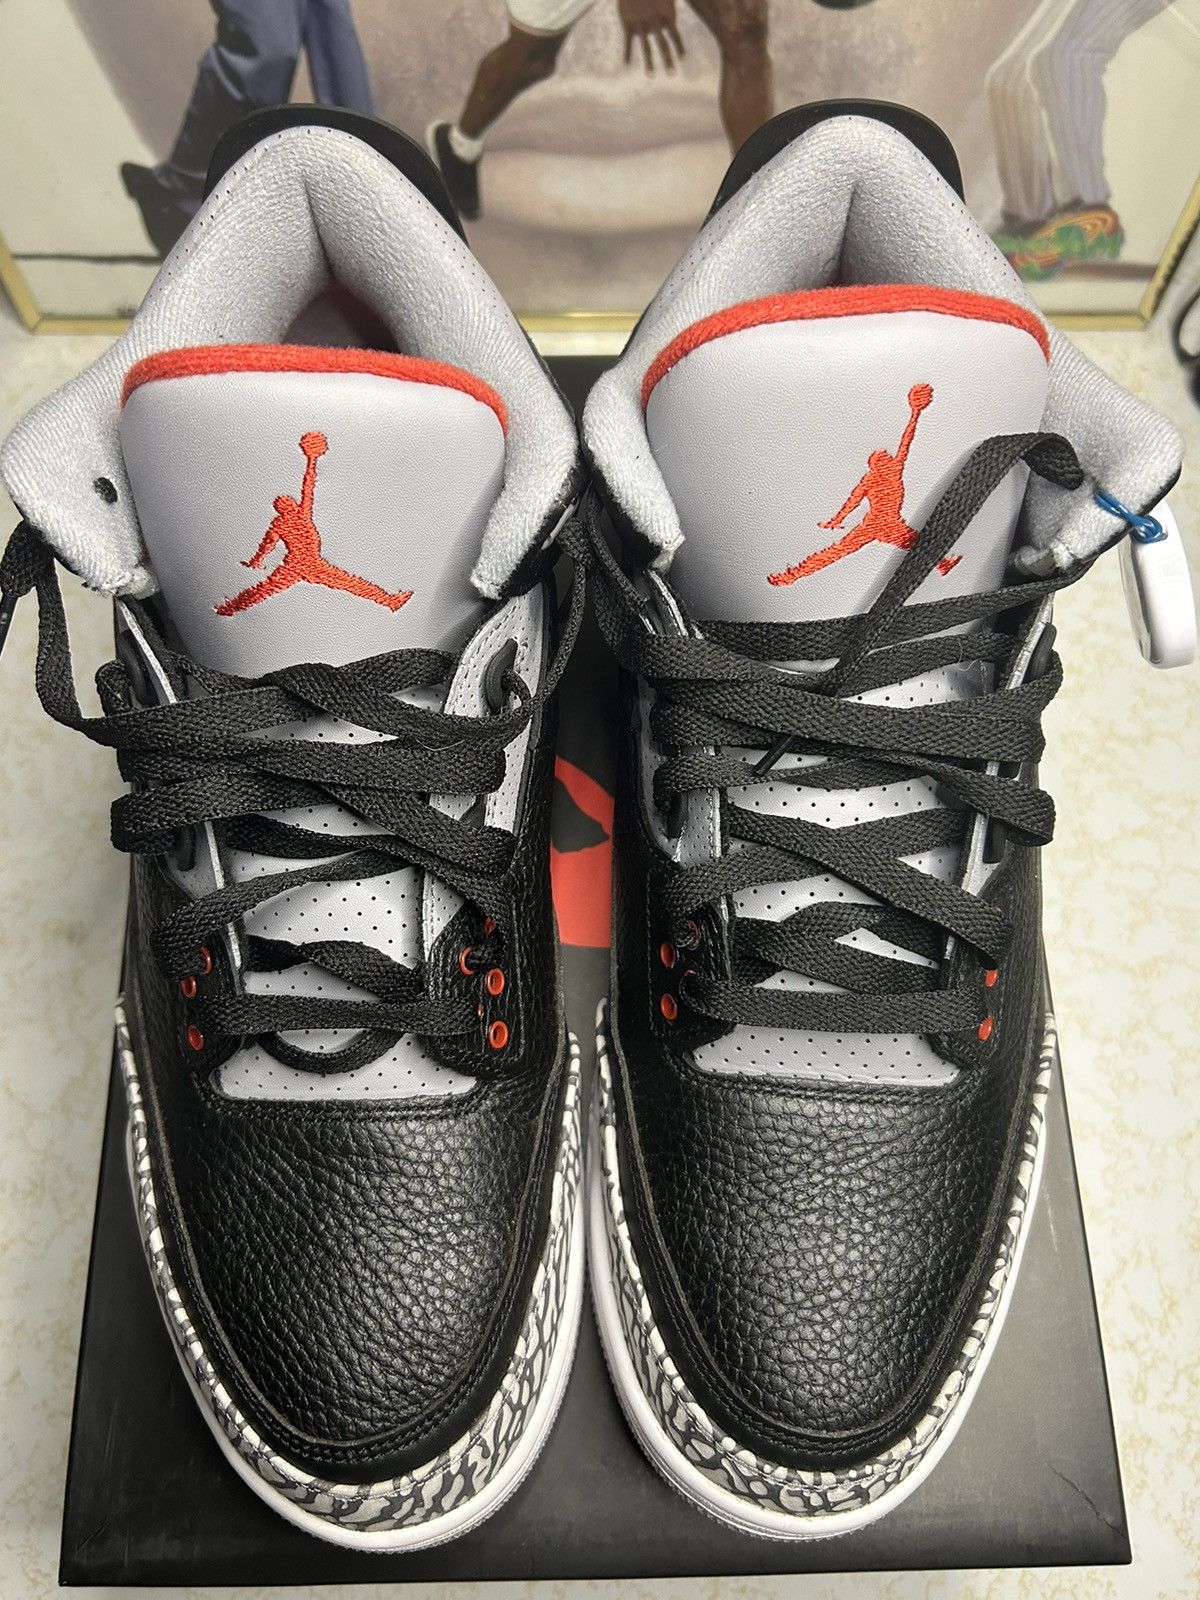 Pre-owned Jordan Brand 3 Retro Black Cement Shoes